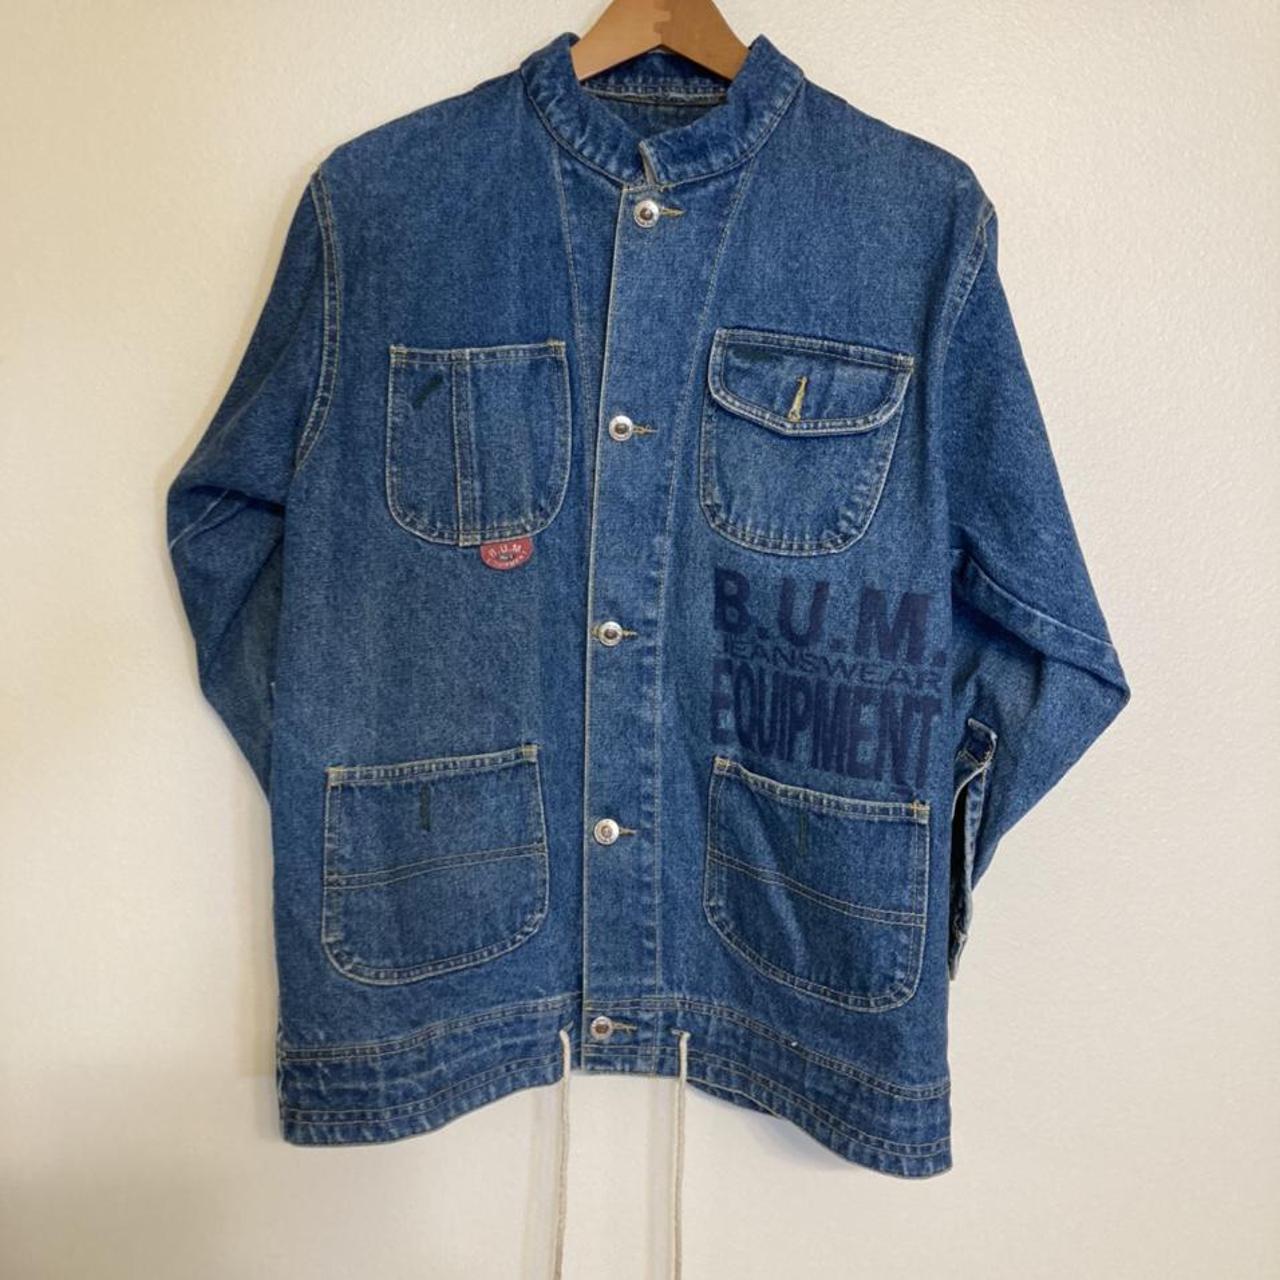 Vintage BUM equipment jean jacket. In great... - Depop